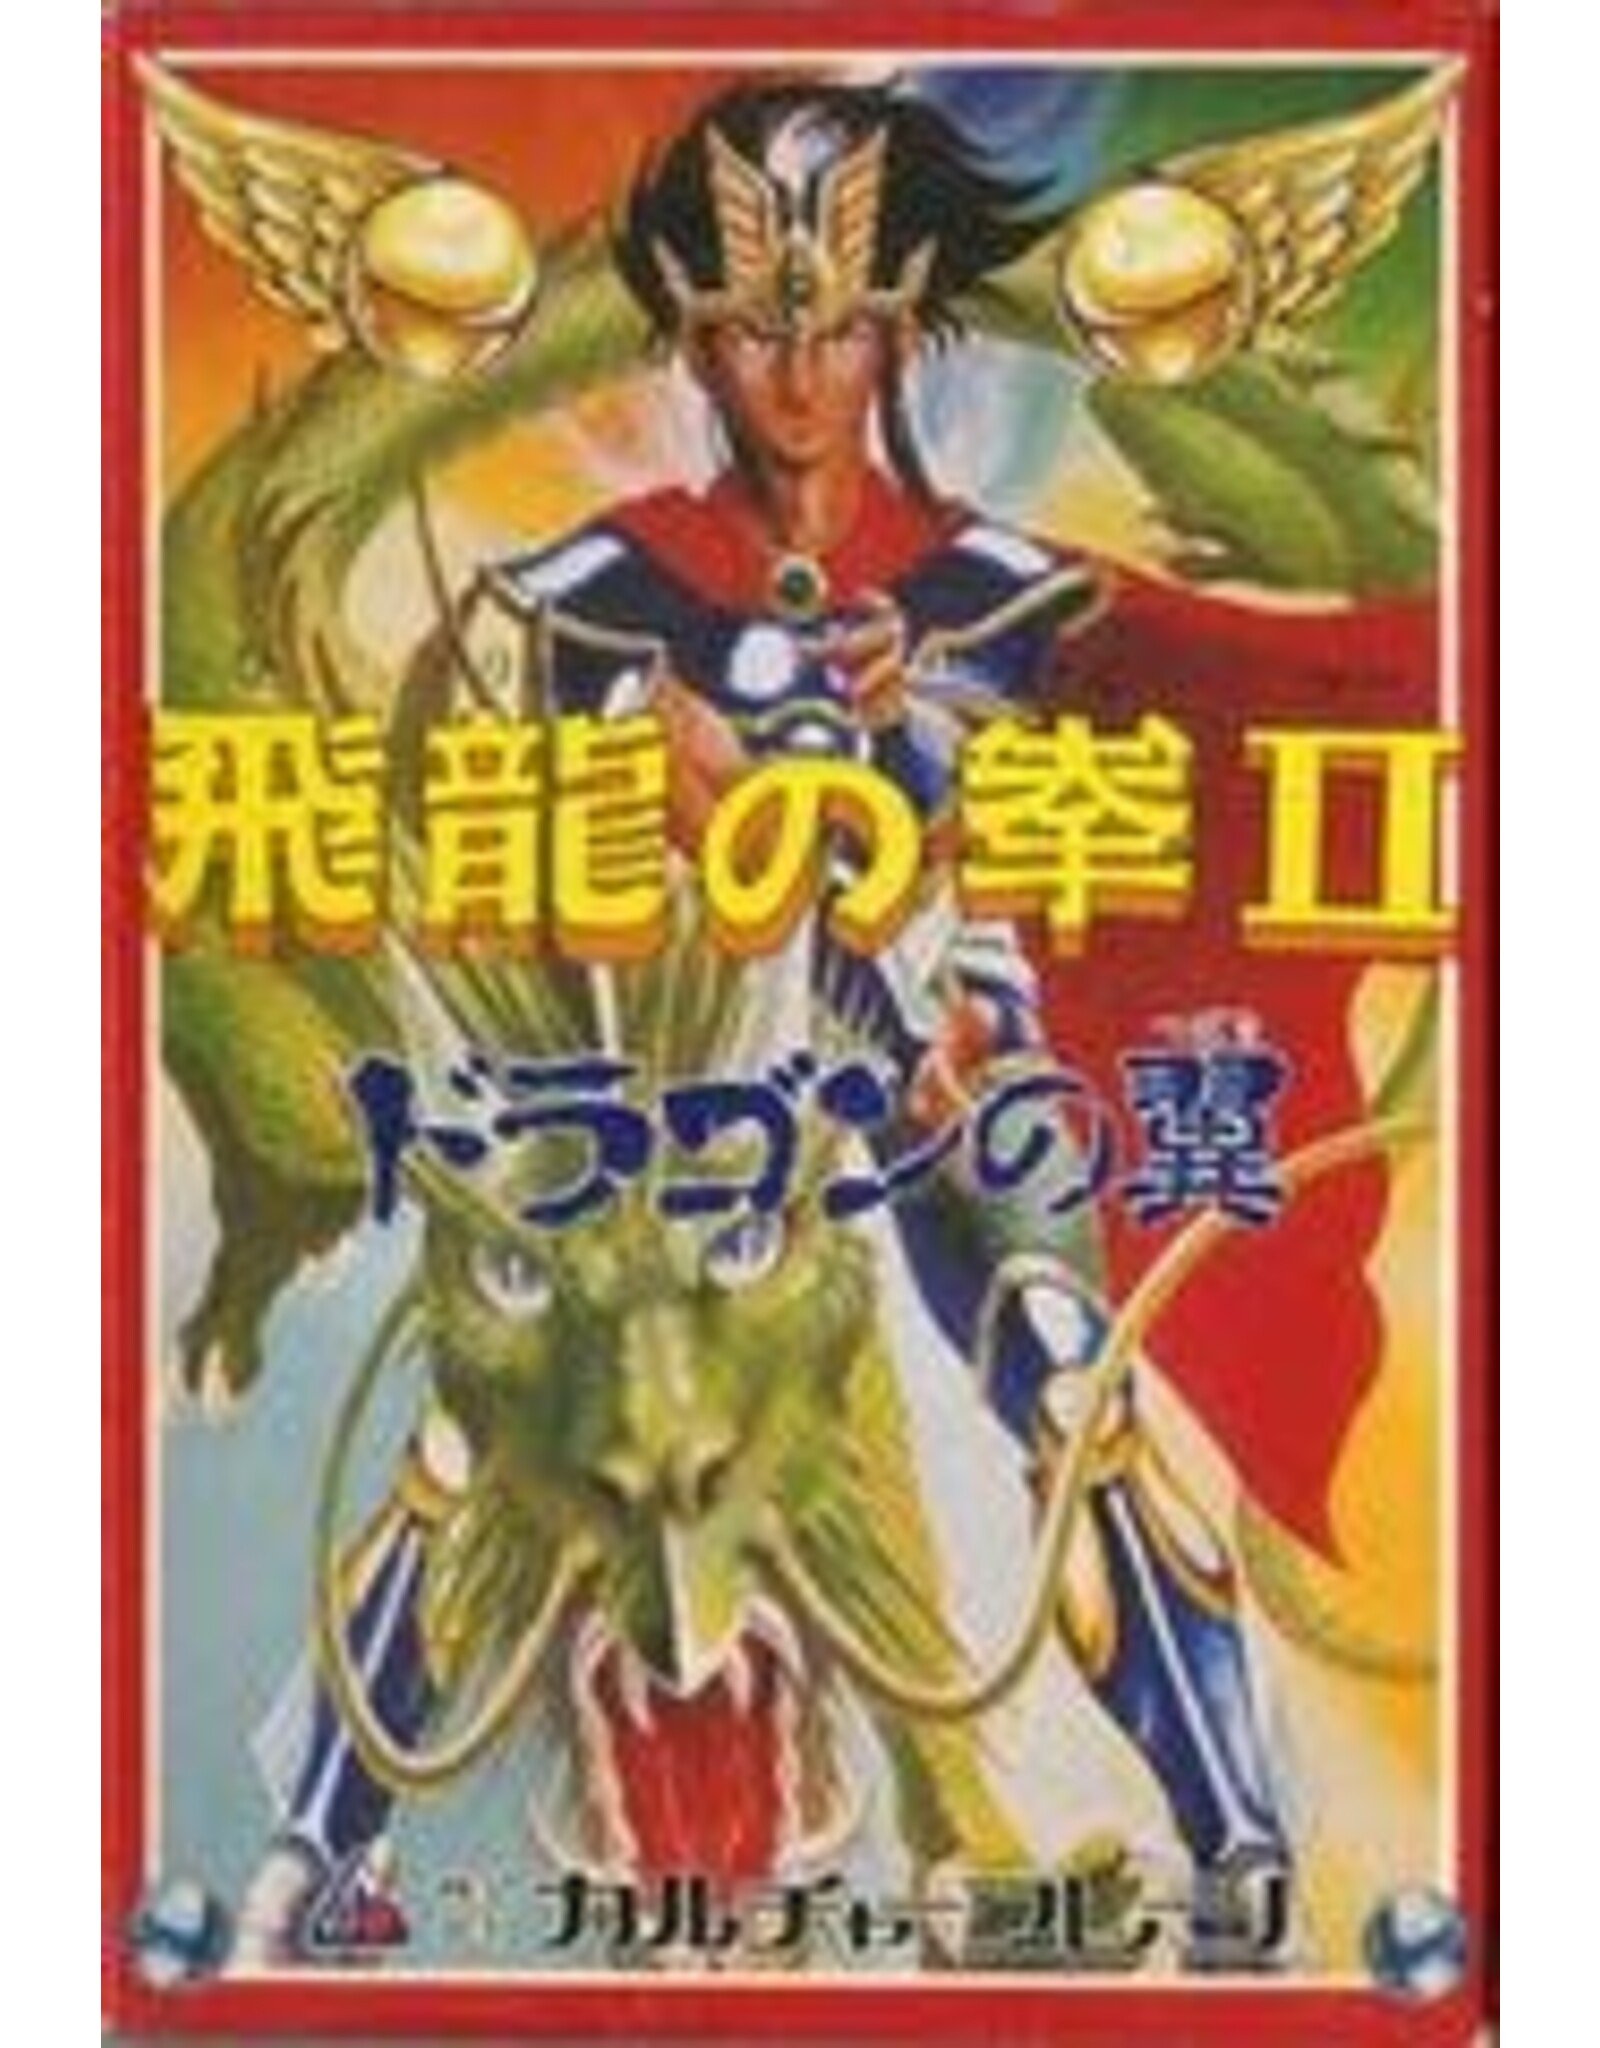 Famicom Hiryuu no Ken II: Dragon no Tsubasa (Cart Only)